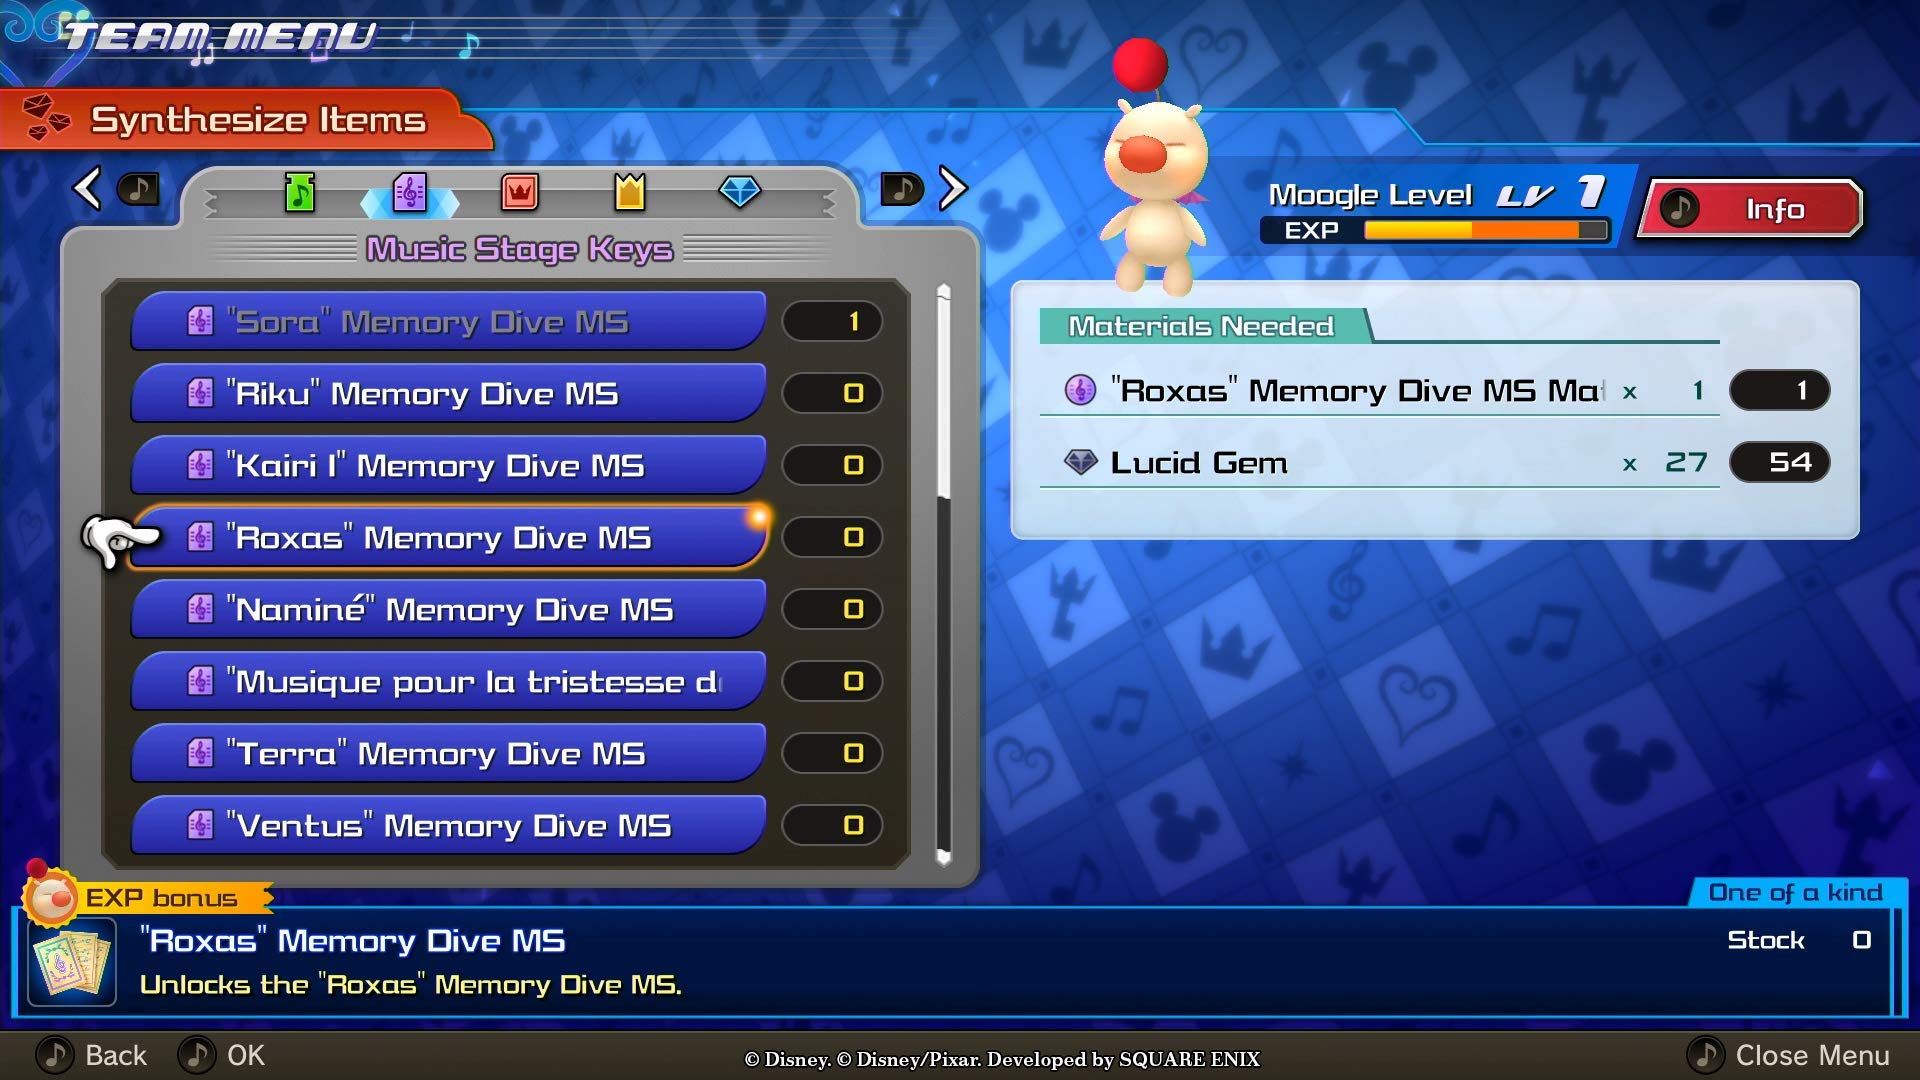 Kingdom Hearts: Melody Of Memory (Nintendo Switch)